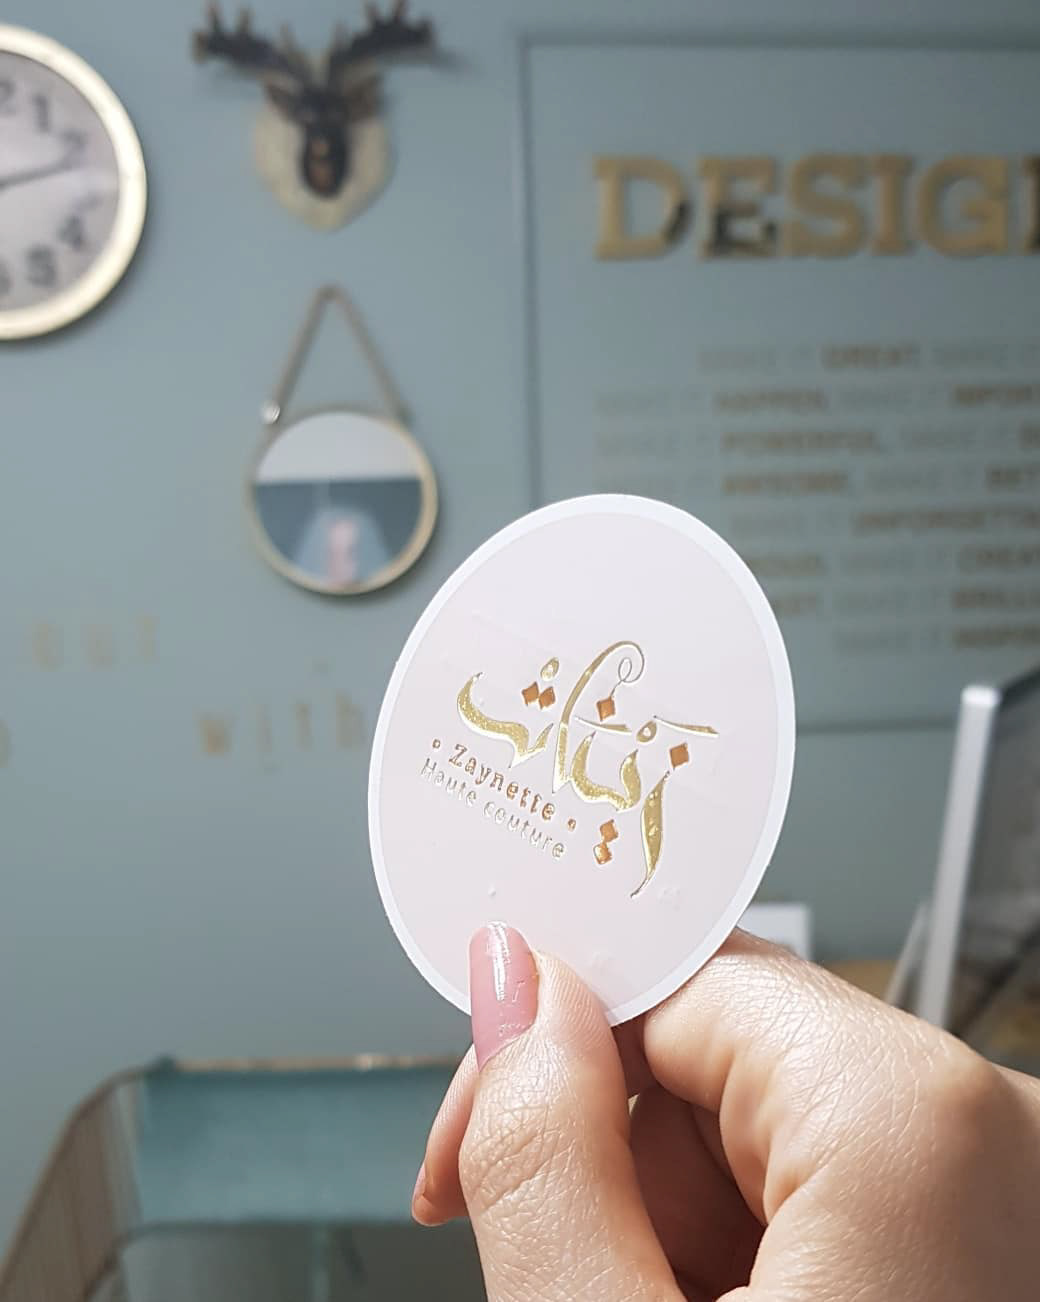 logo business card visual identity Sfax tunisia think create Style Fashion  couture